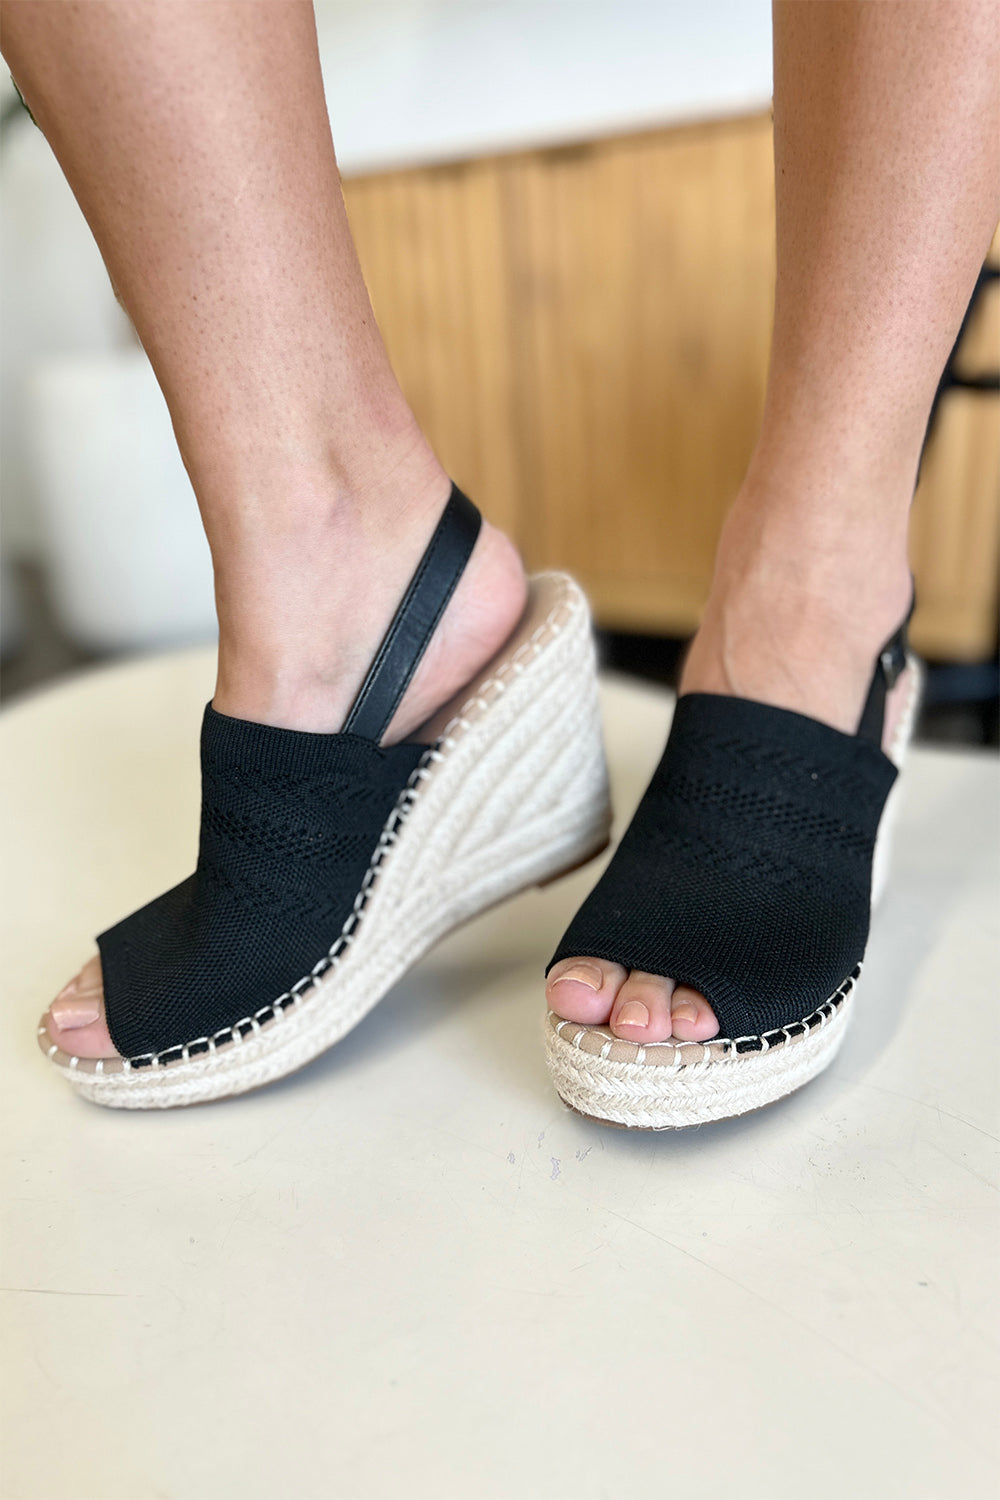 Rae Peep Toe Wedge Sandals